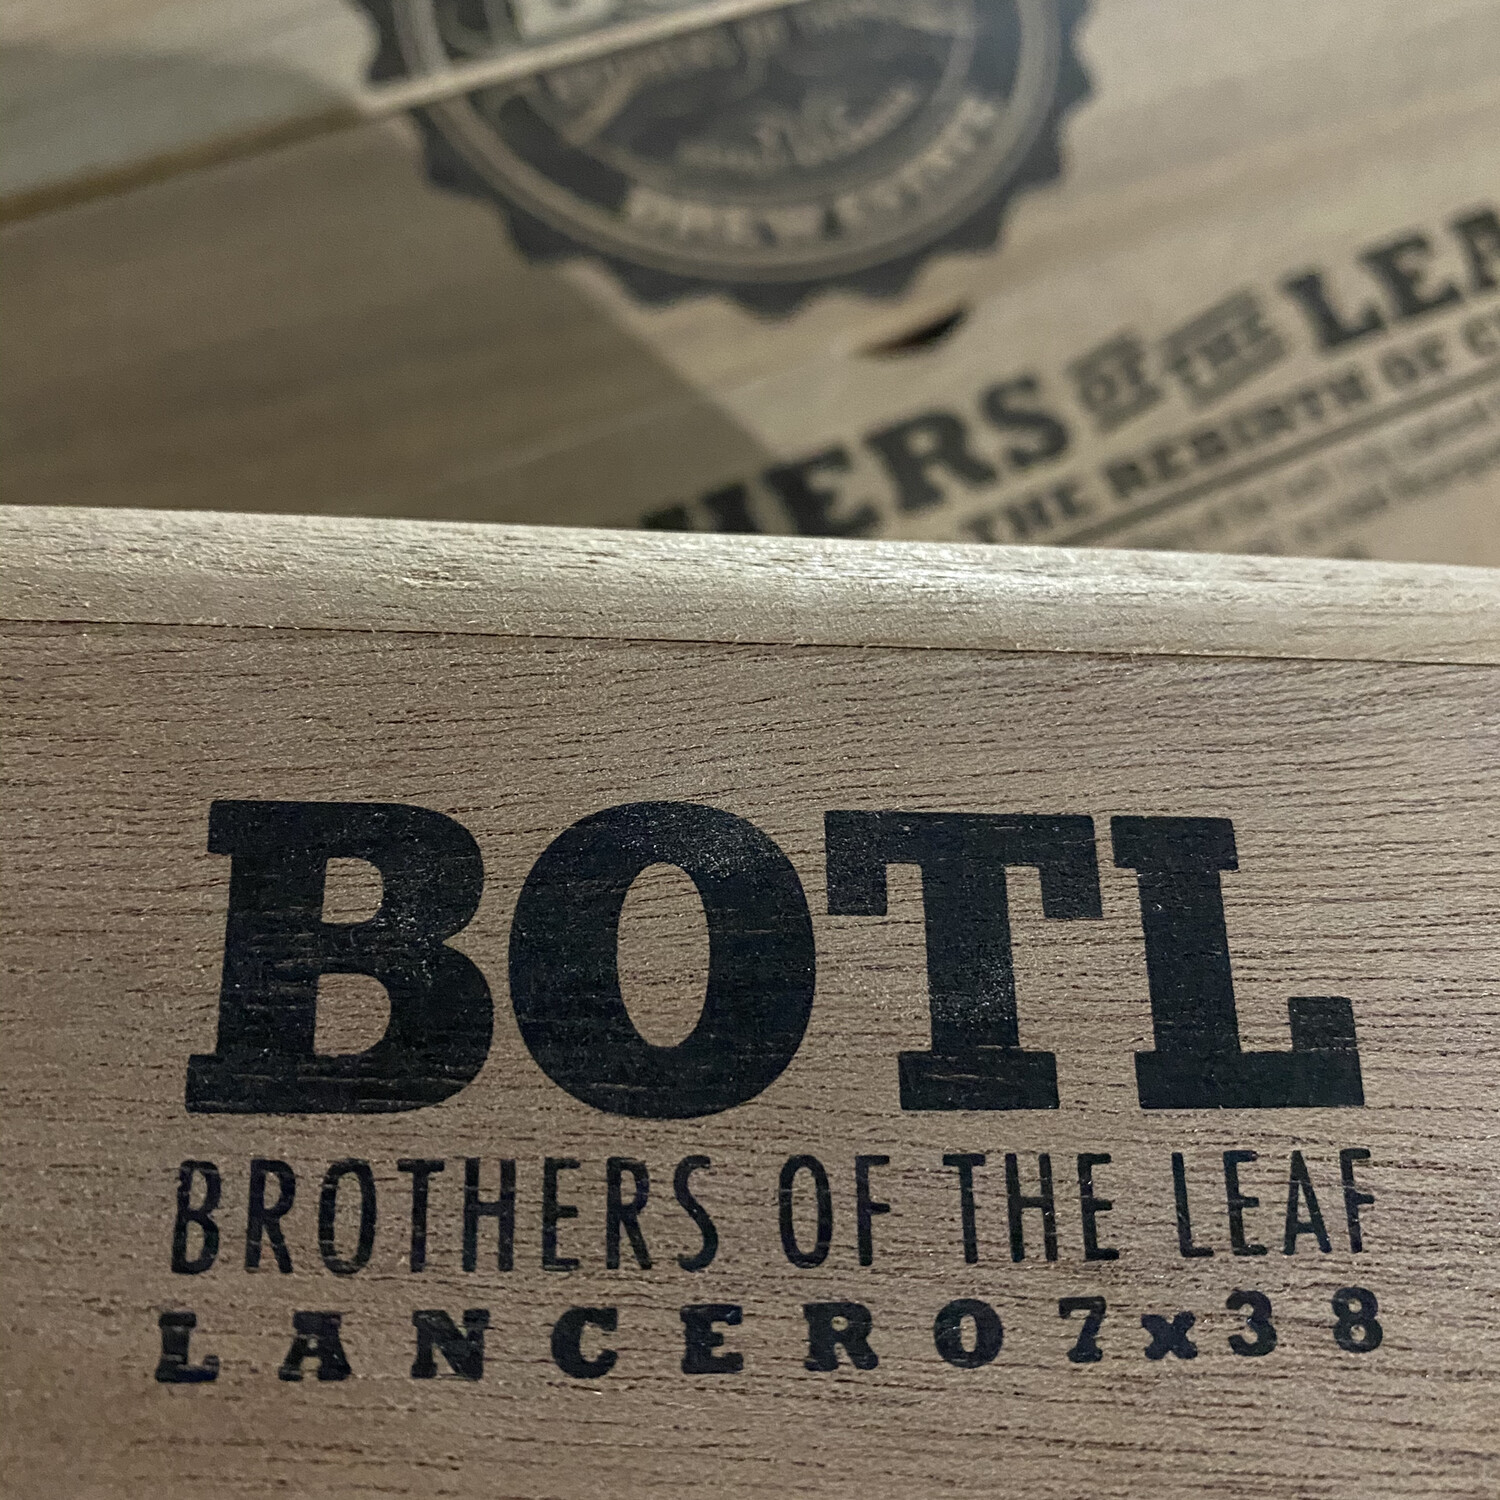 BOTL - Lancero 7x38, 15’s Brothers of the Leaf Cigar